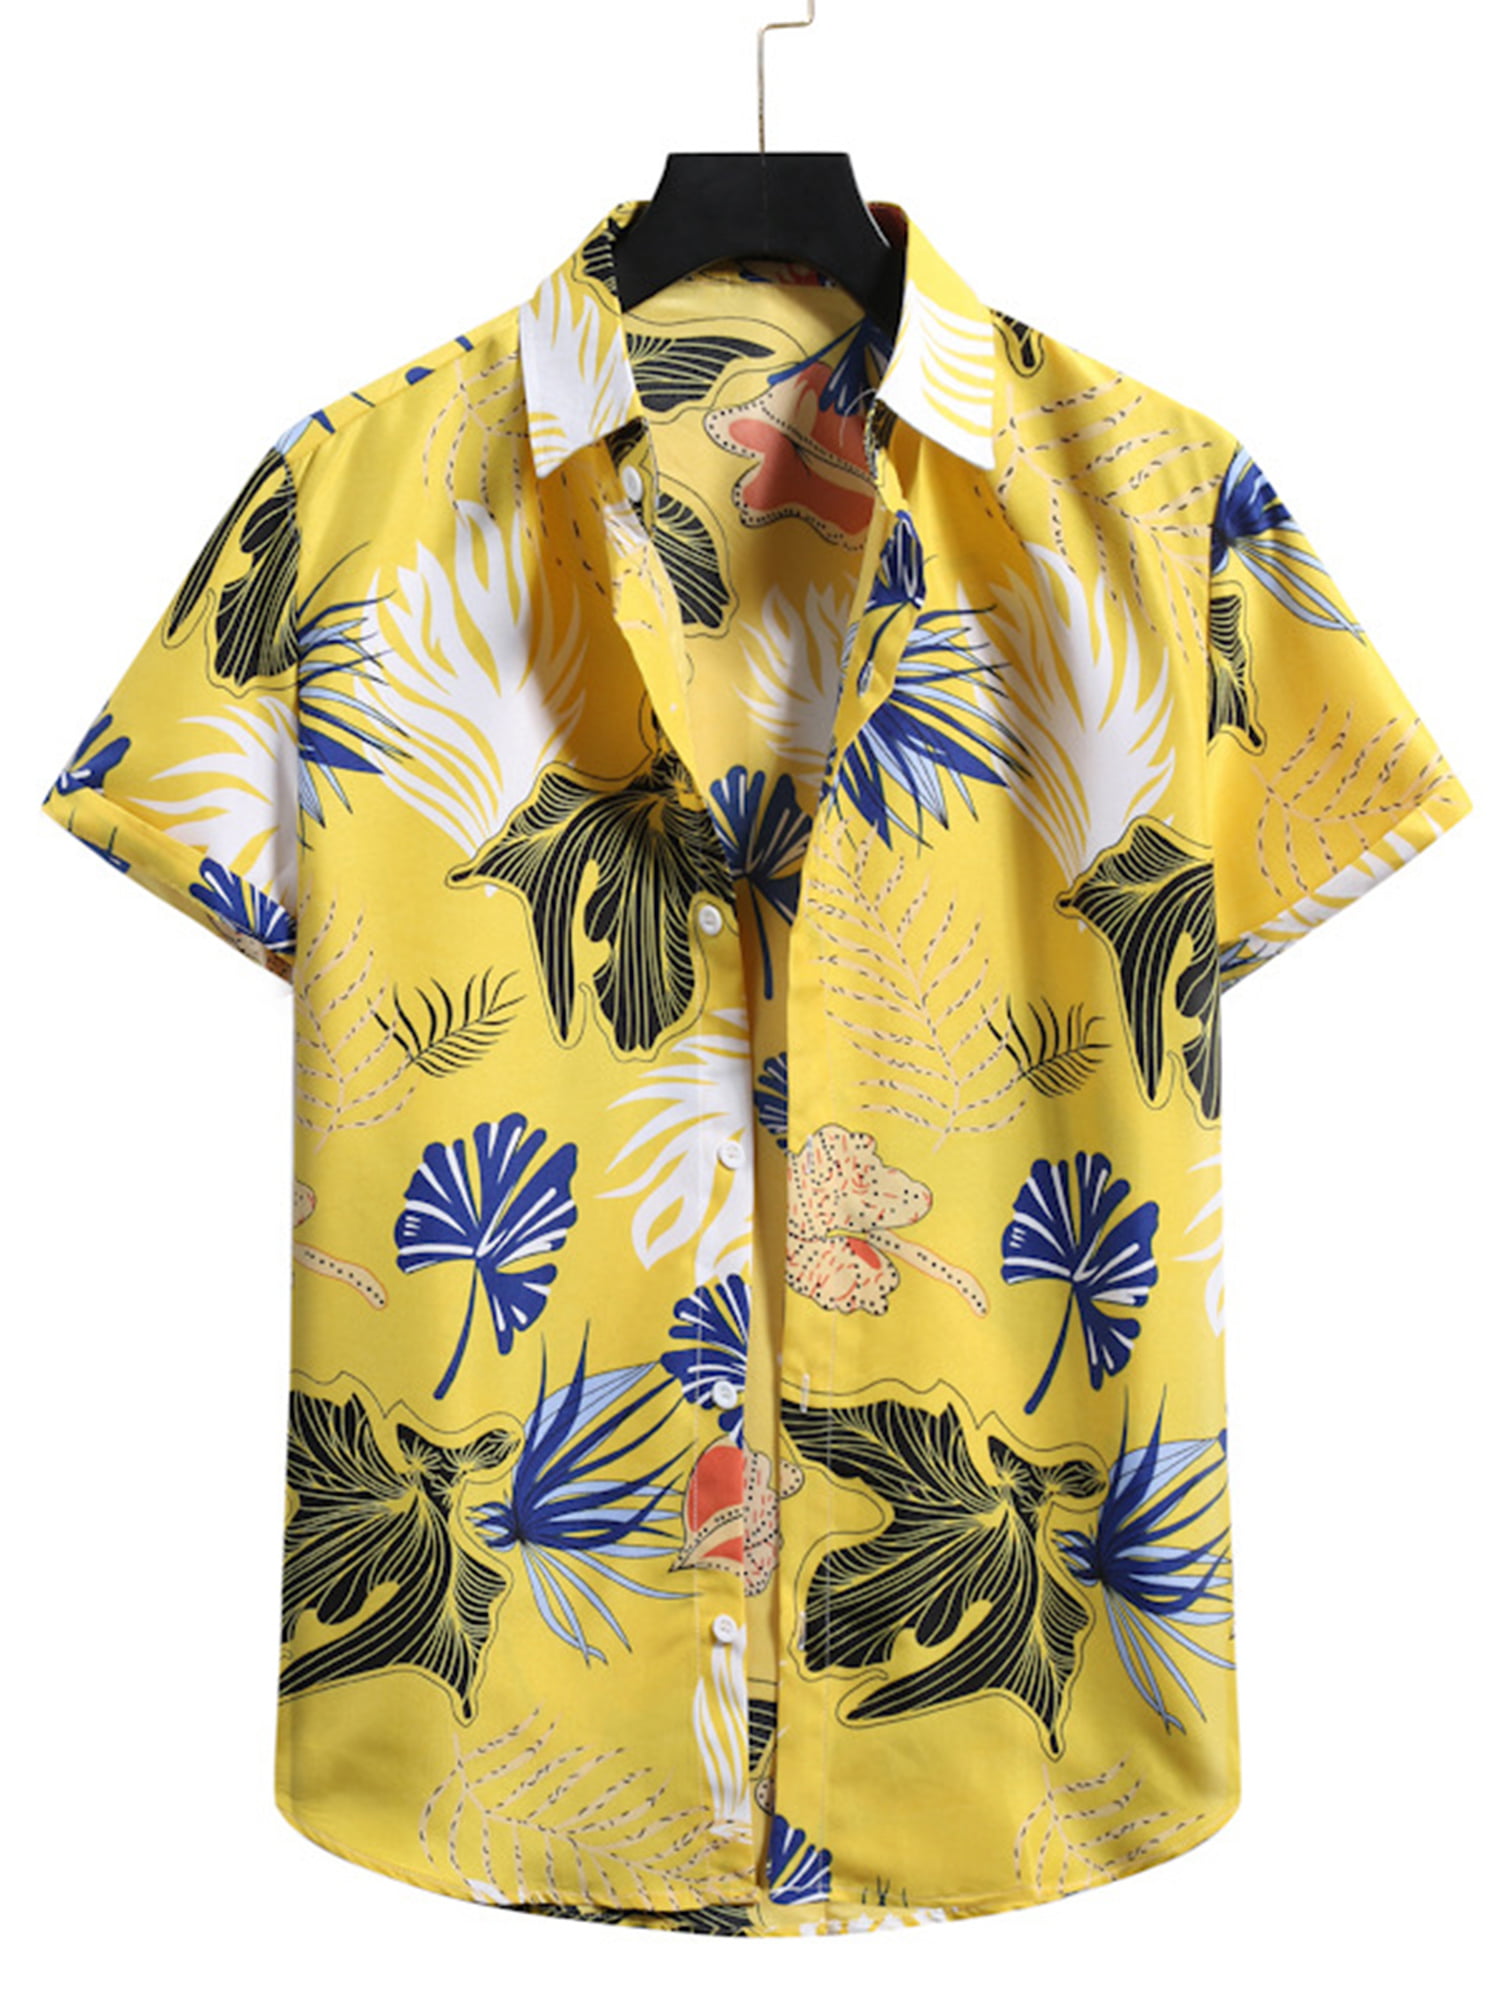 Mens Short Sleeve Blouse Hawaiian Shirts Summer Beach Casual T Shirt Top Tee HOT 